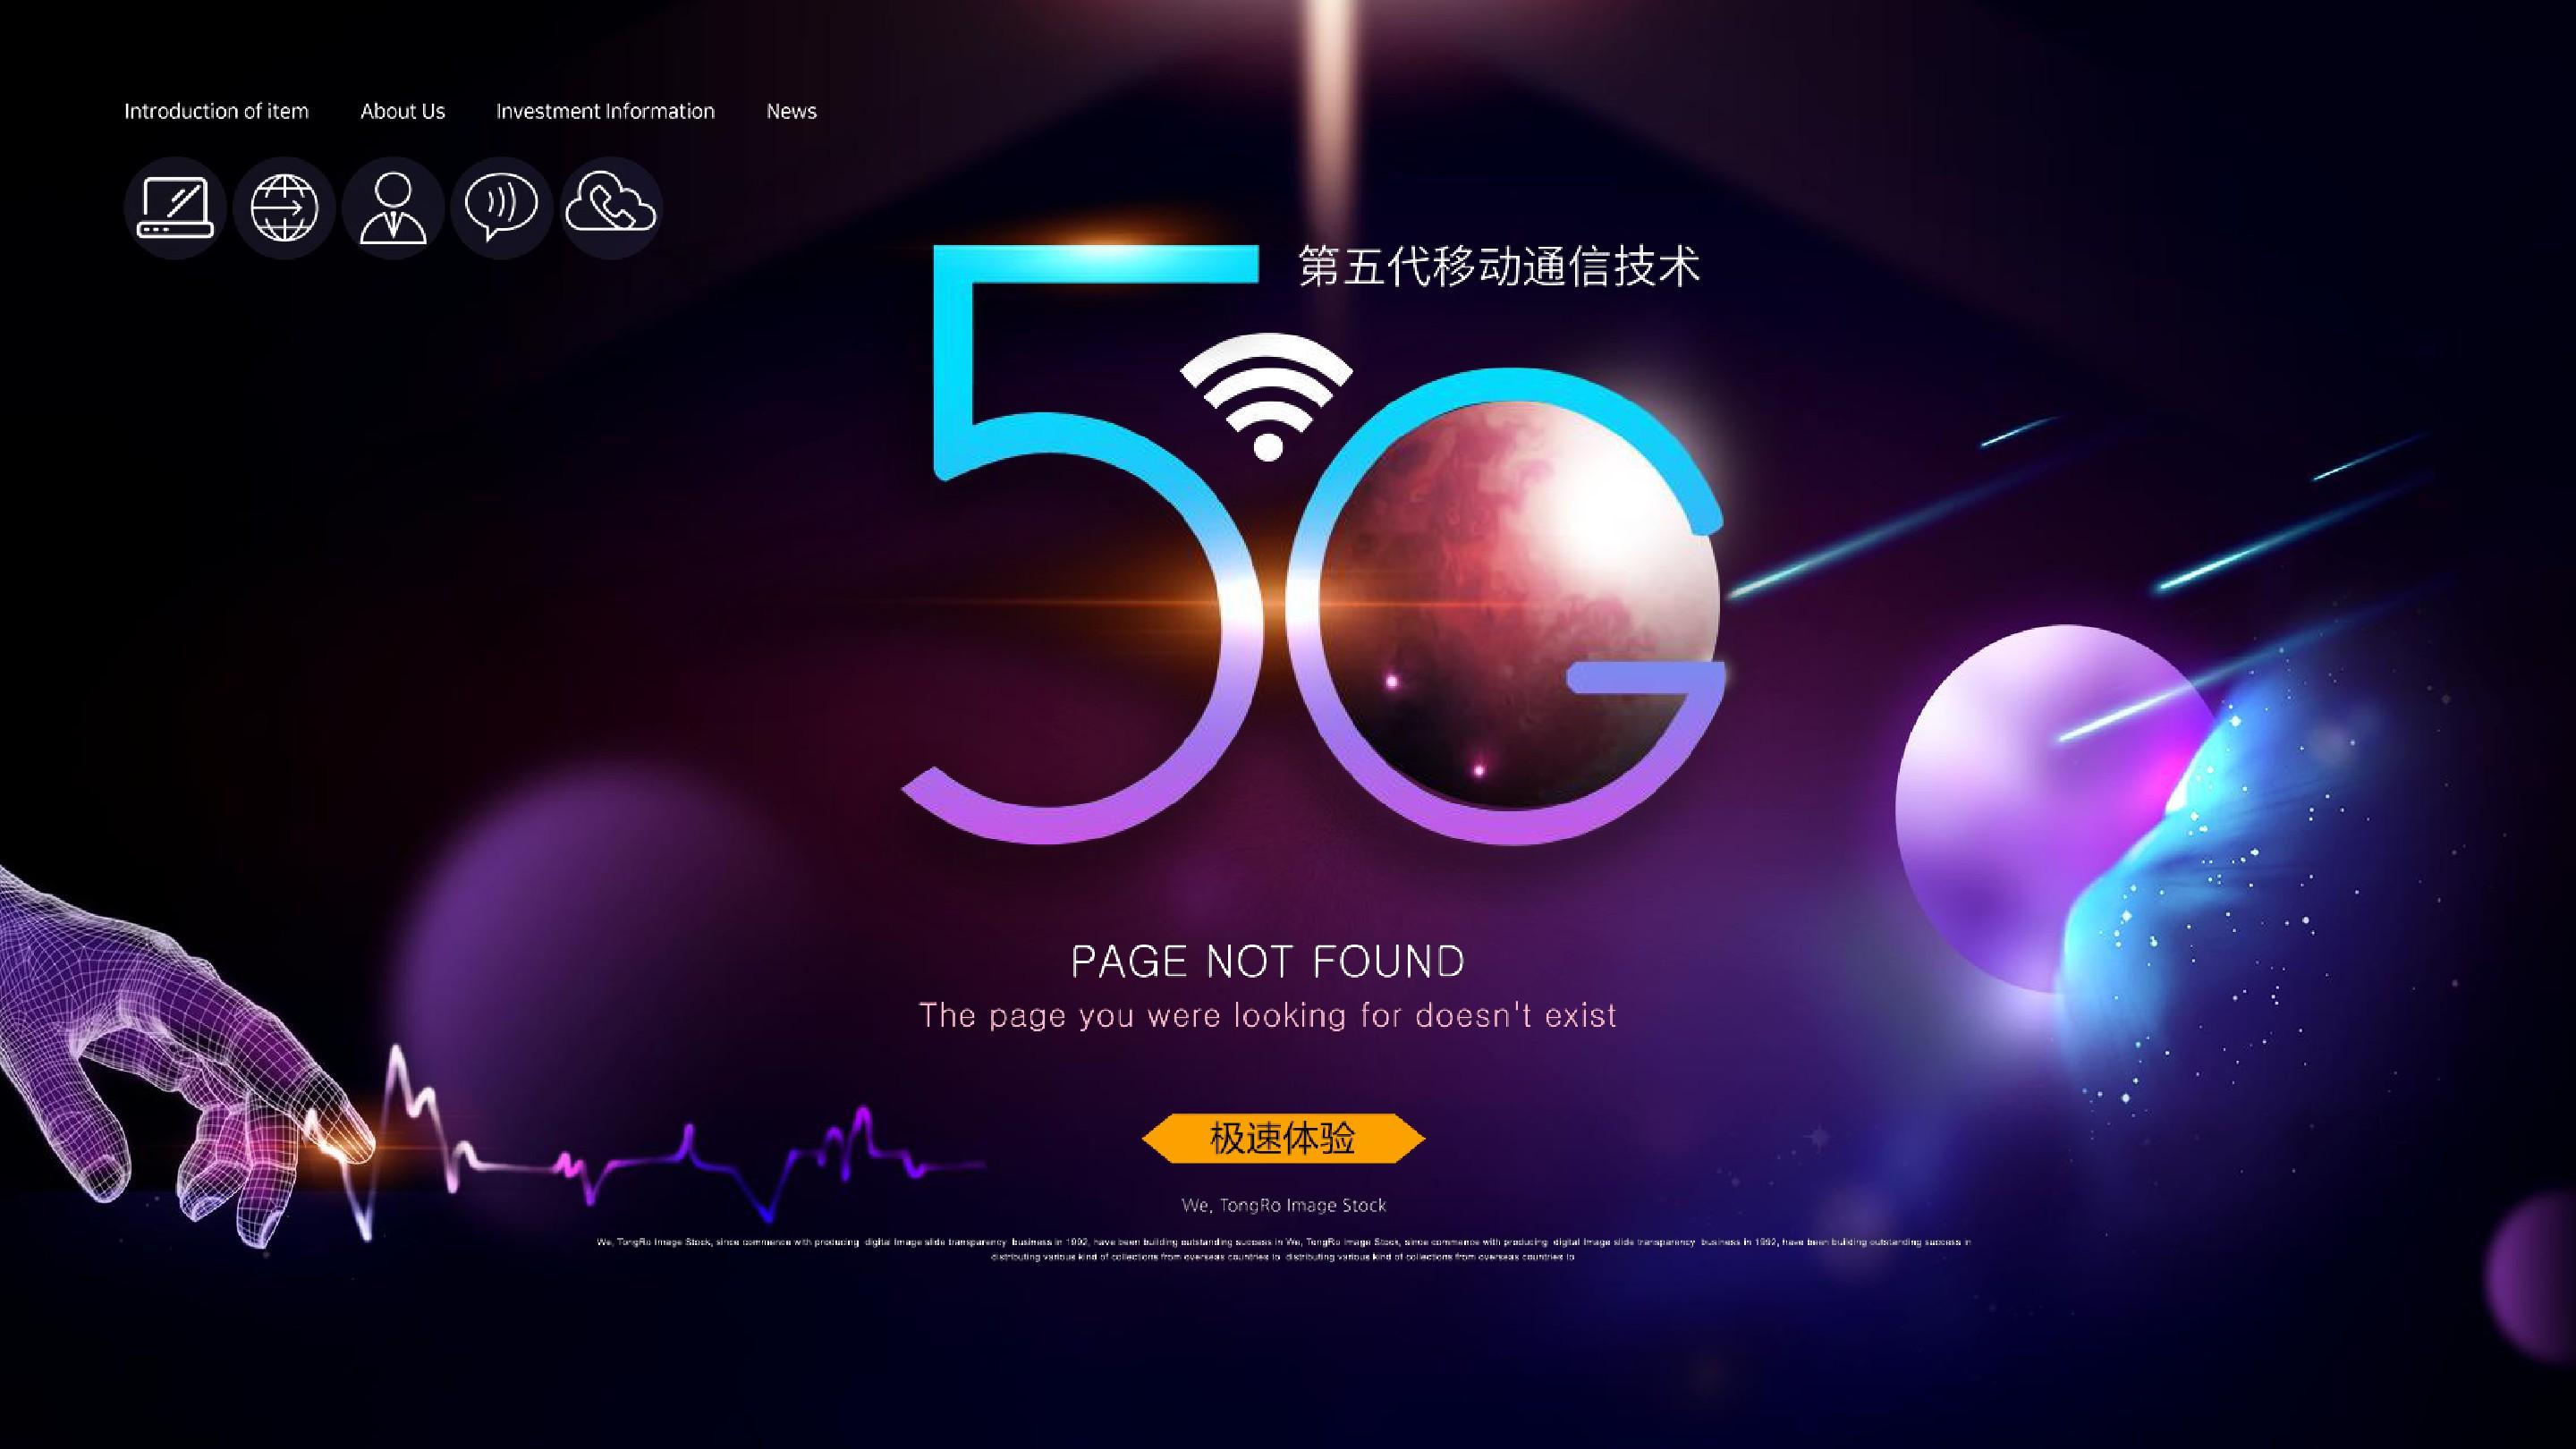 5G 网络覆盖上海，引领全新信息时代，生活更便利丰富  第6张